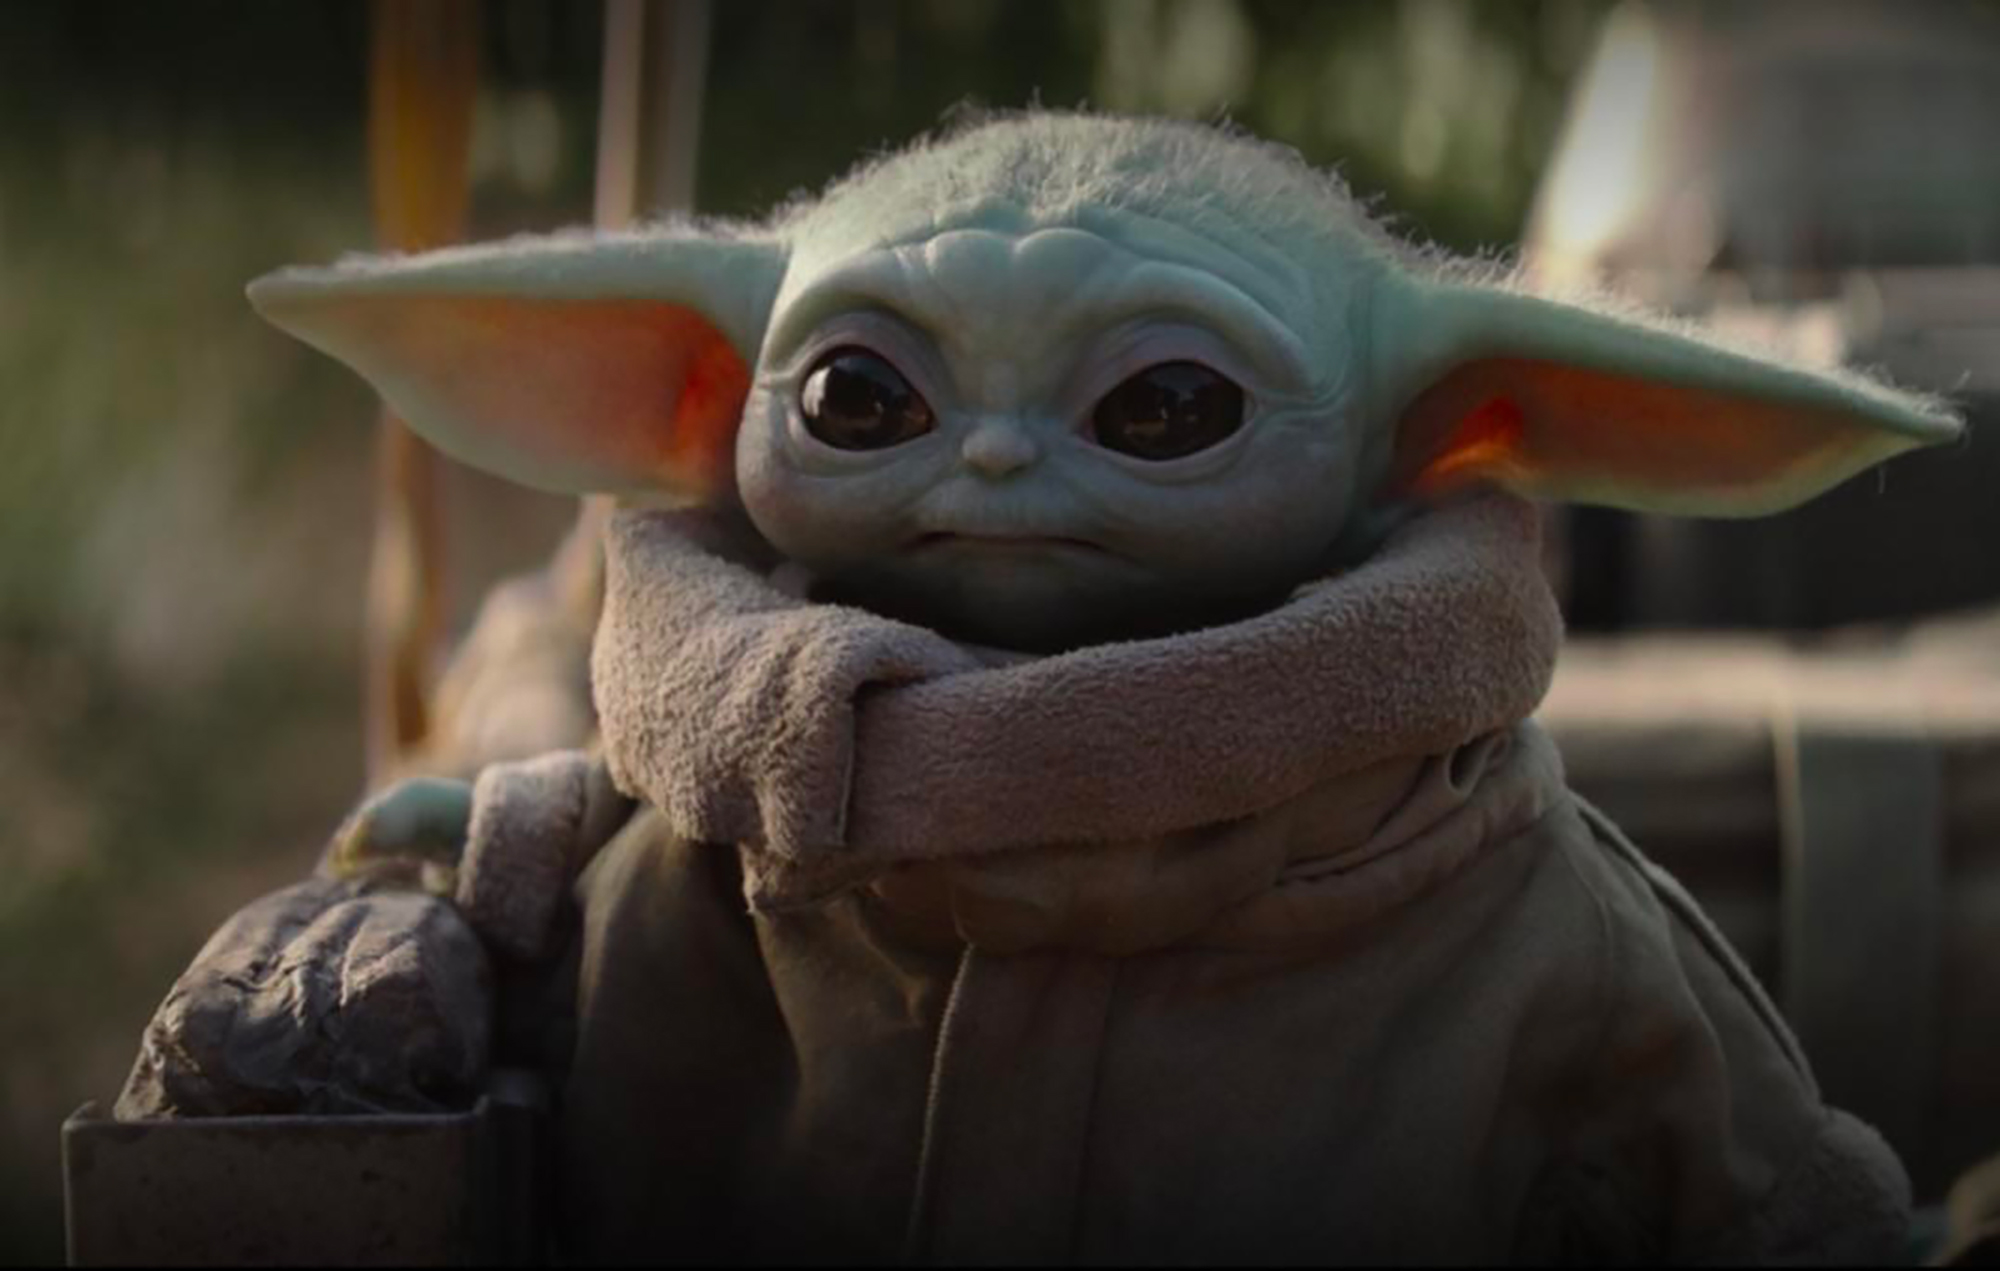 Baby Yoda — whose real name is Grogu — in 'The Mandalorian'